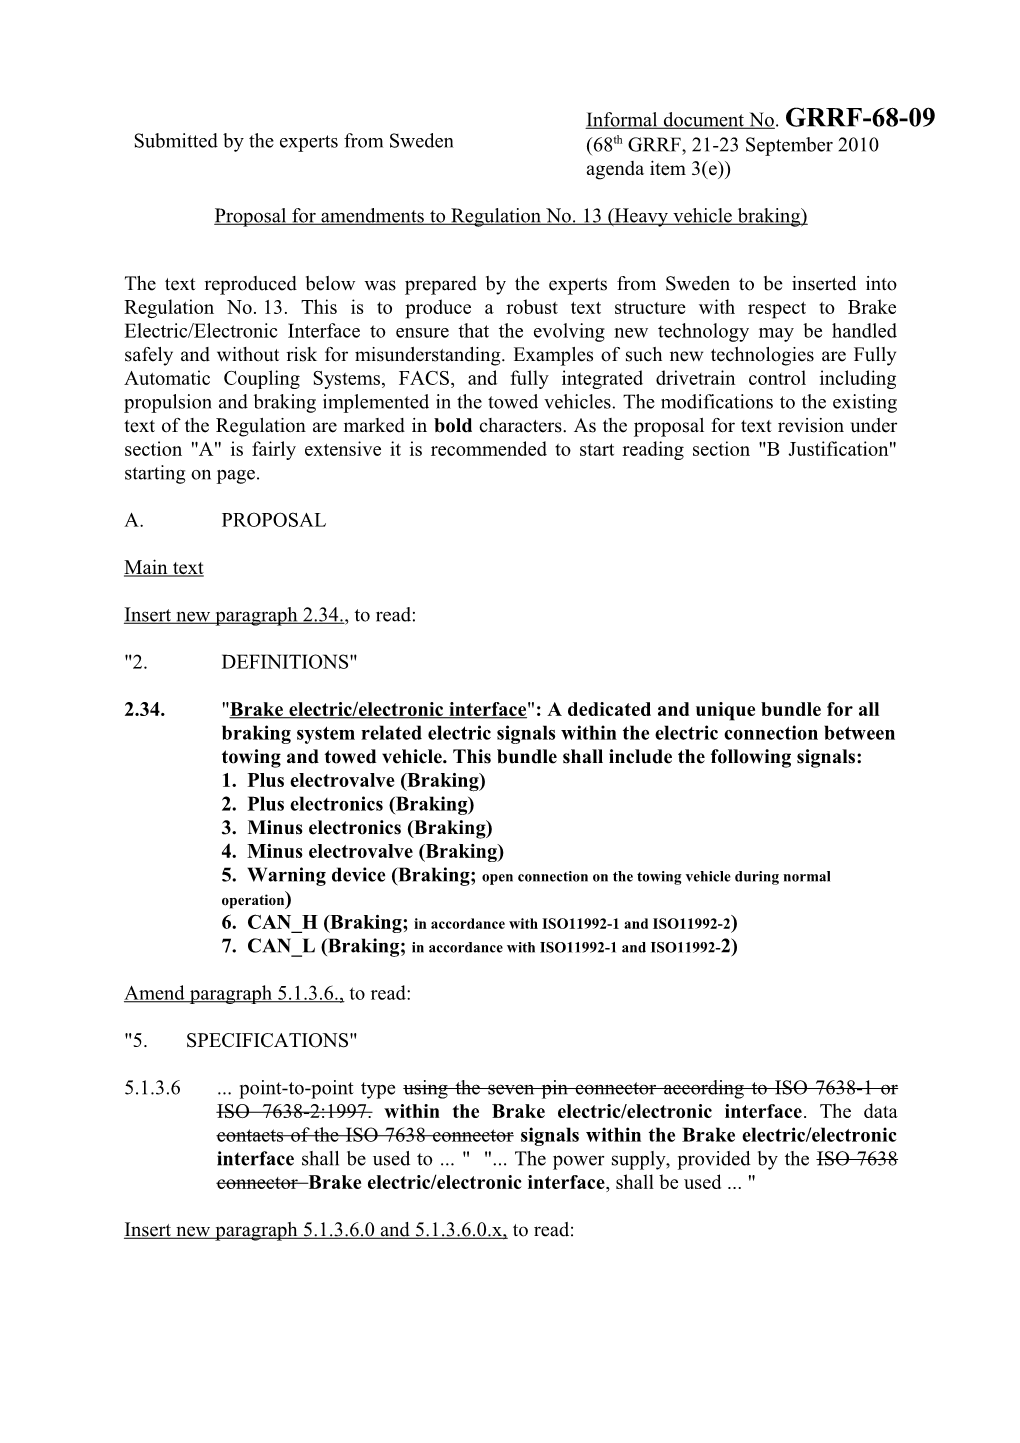 Proposal for Amendments to Regulation No. 13(Heavy Vehicle Braking)